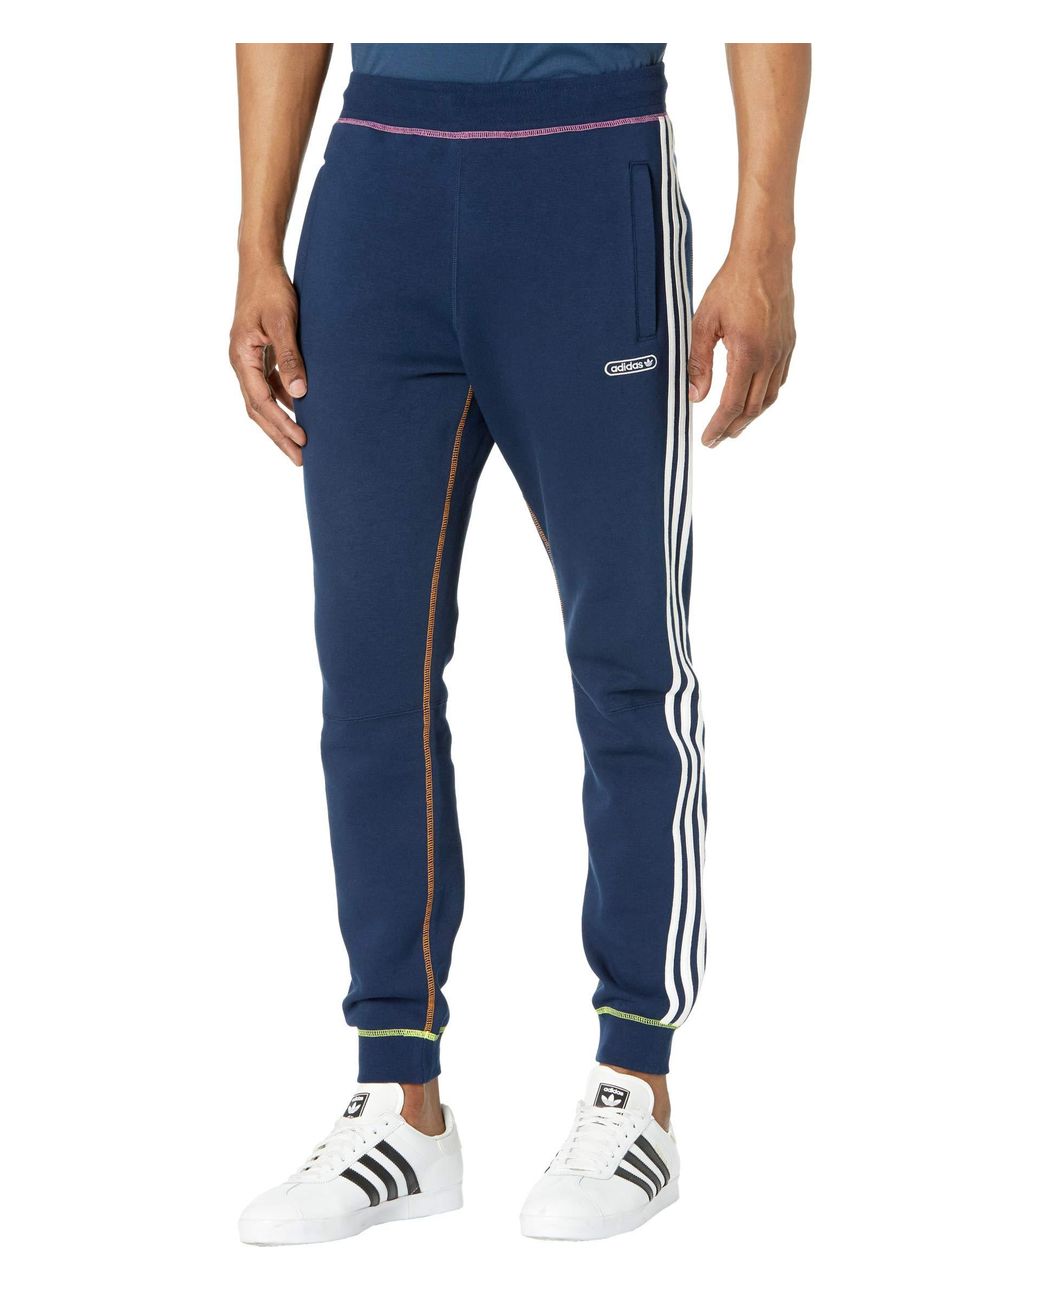 adidas Originals Cotton Contrast Stitch Pants in Navy (Blue) for Men - Lyst